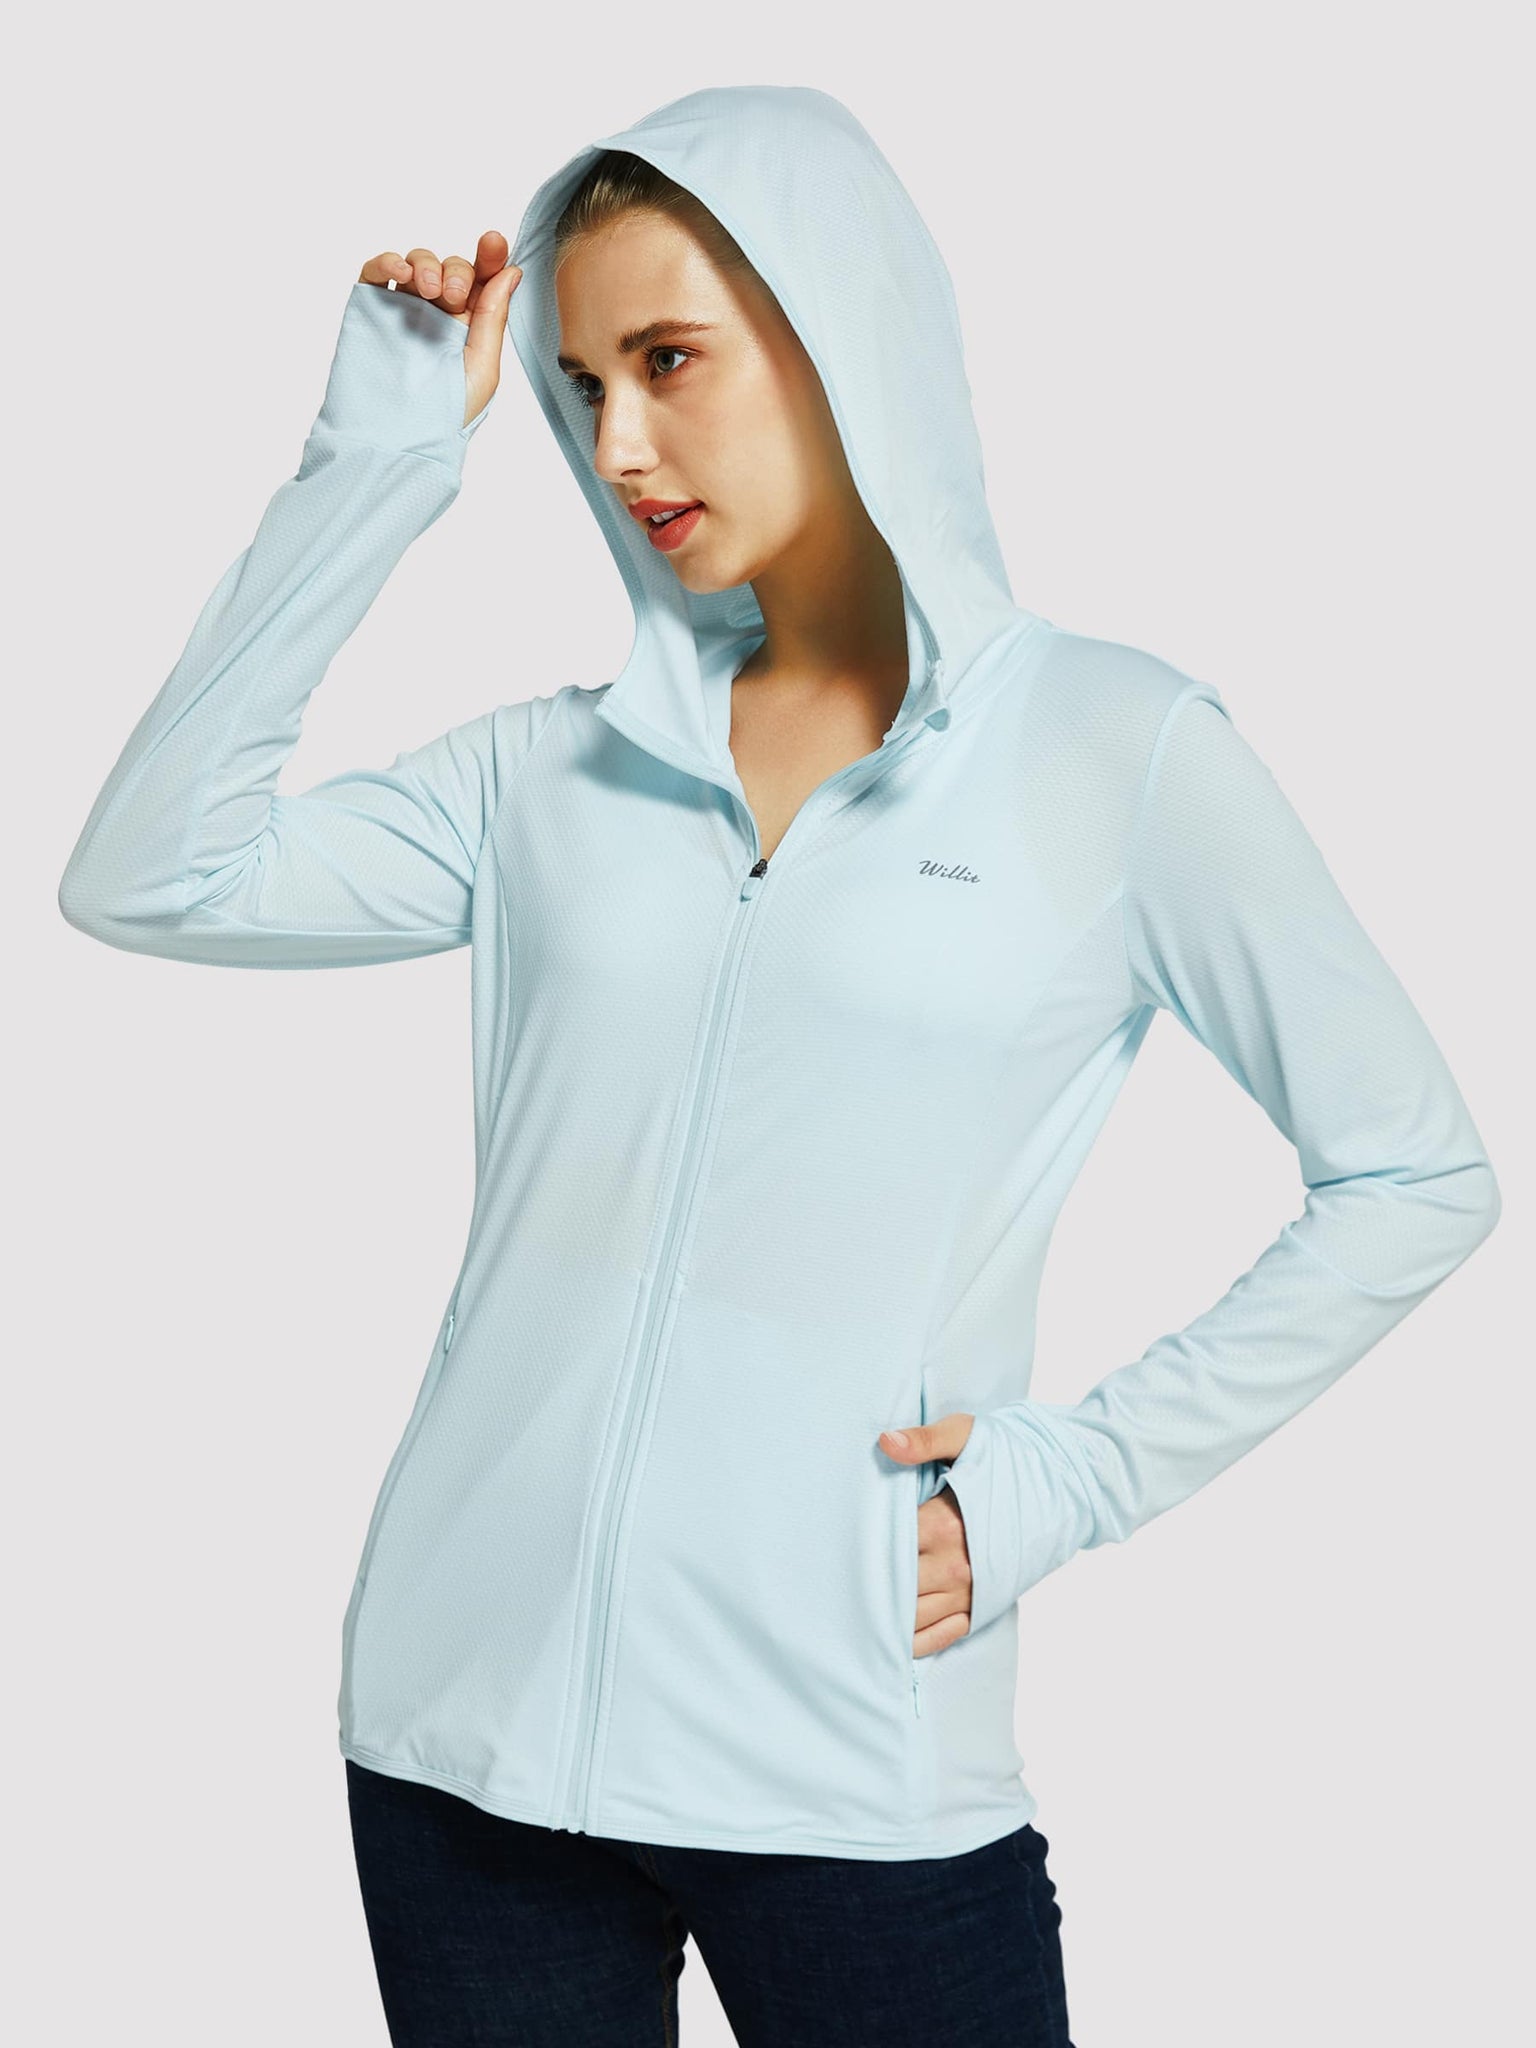 Willit Women's Outdoor Sun Protection Jacket Full Zip_LightBlue_model1